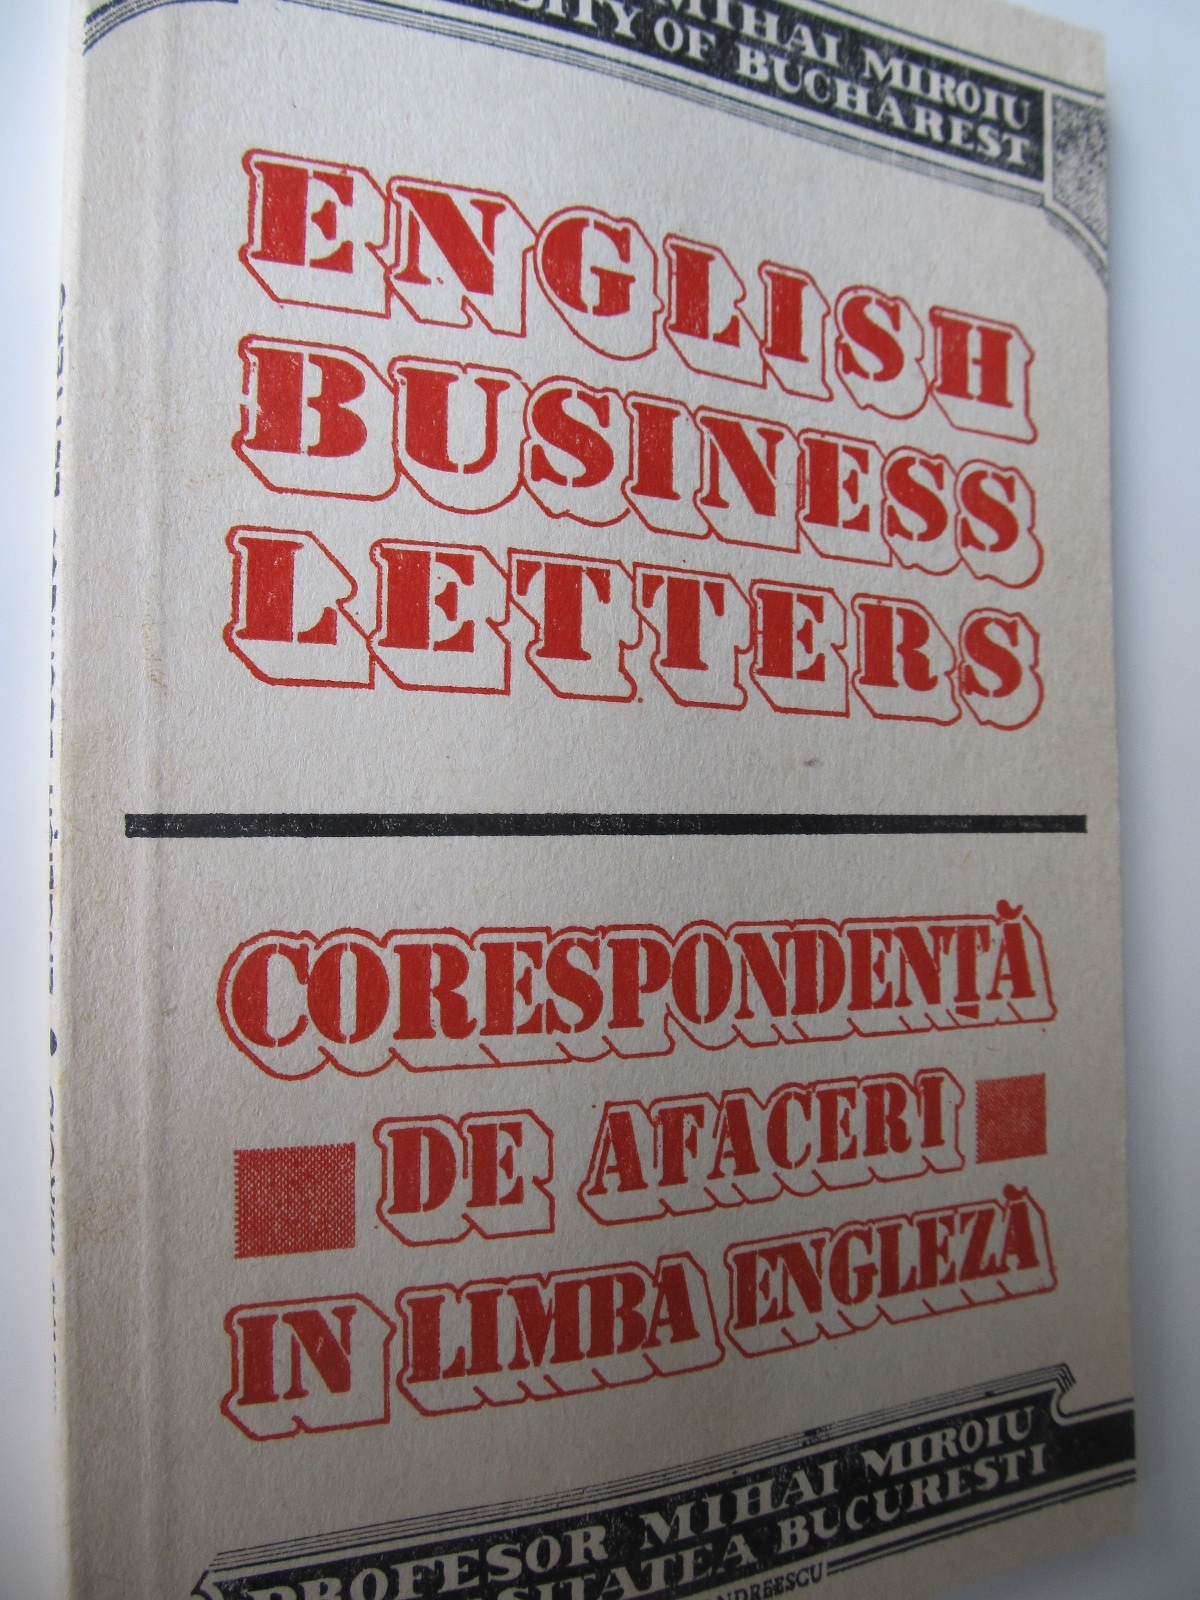 English Buisness Letters - Corespondenta de afaceri in limba engleza - Mihai Miroiu | Detalii carte